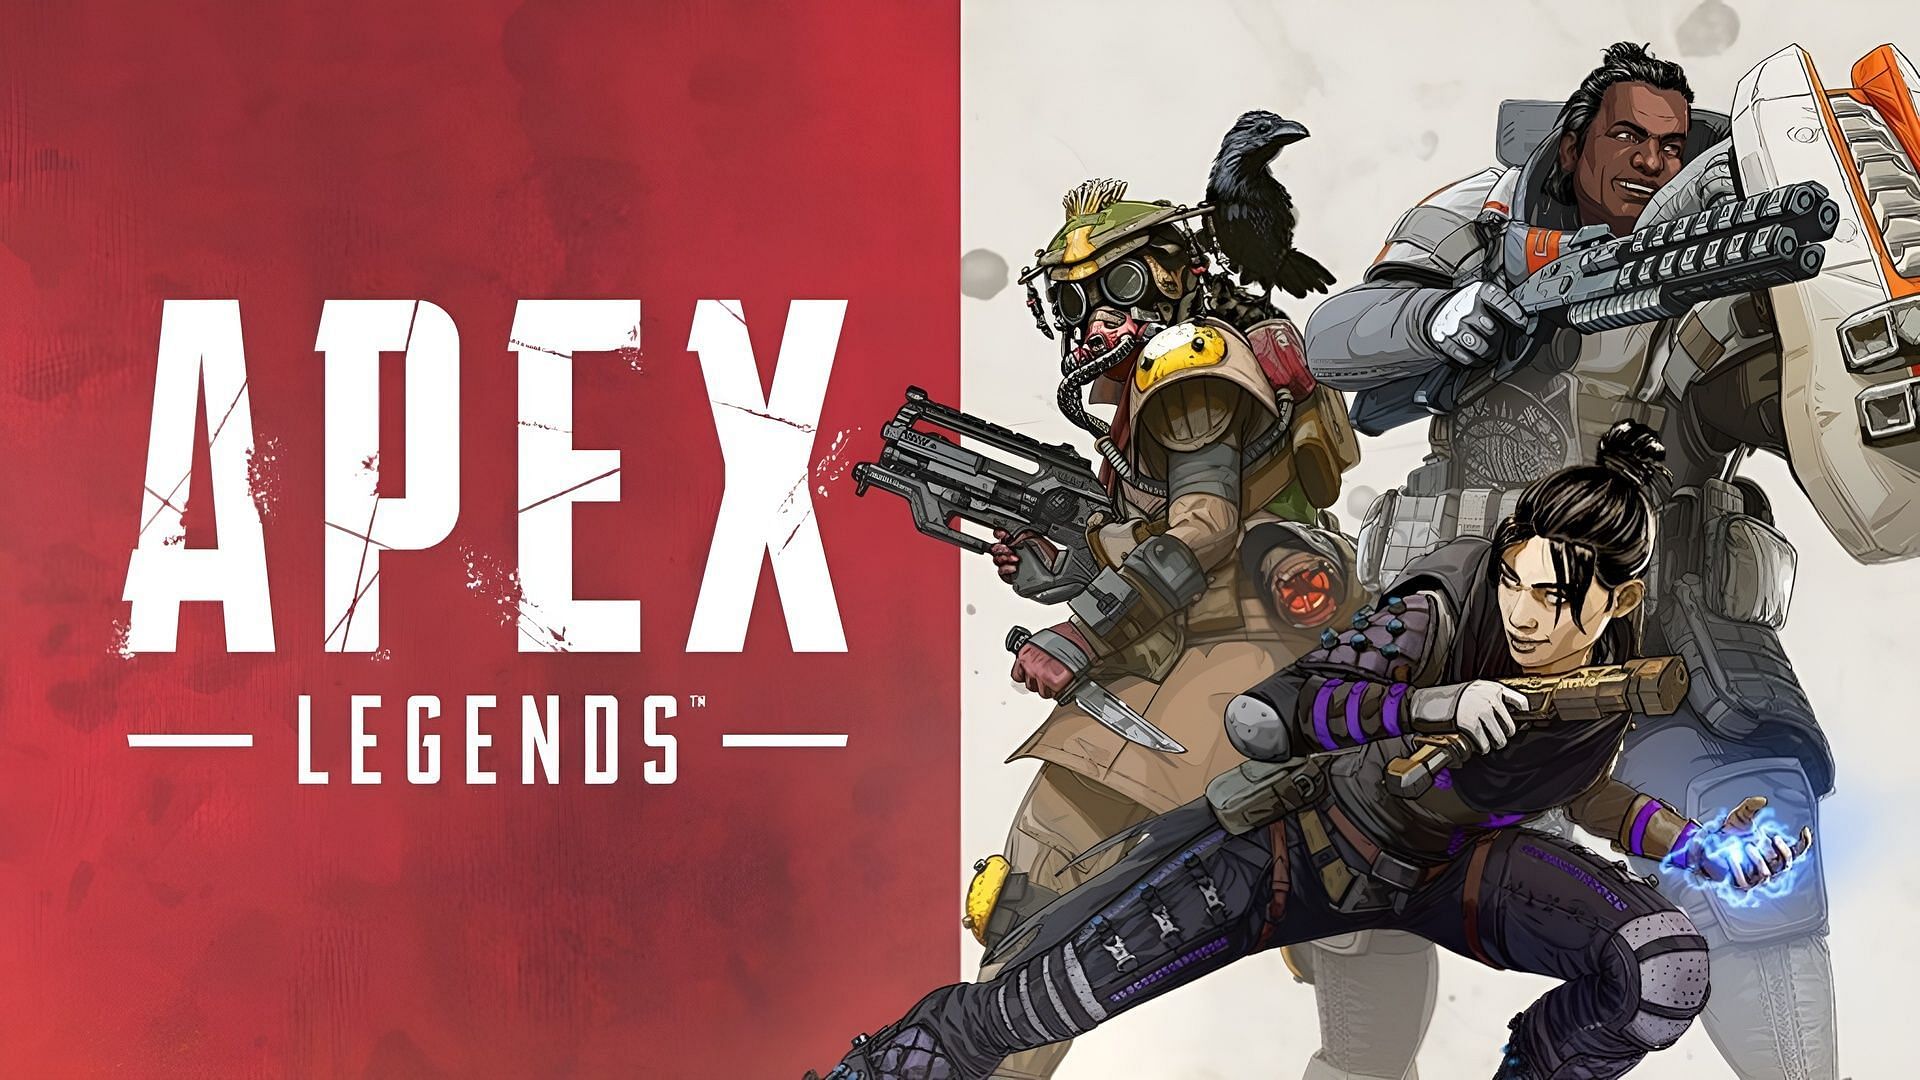 FINALLY! Apex Legends Cross Progression